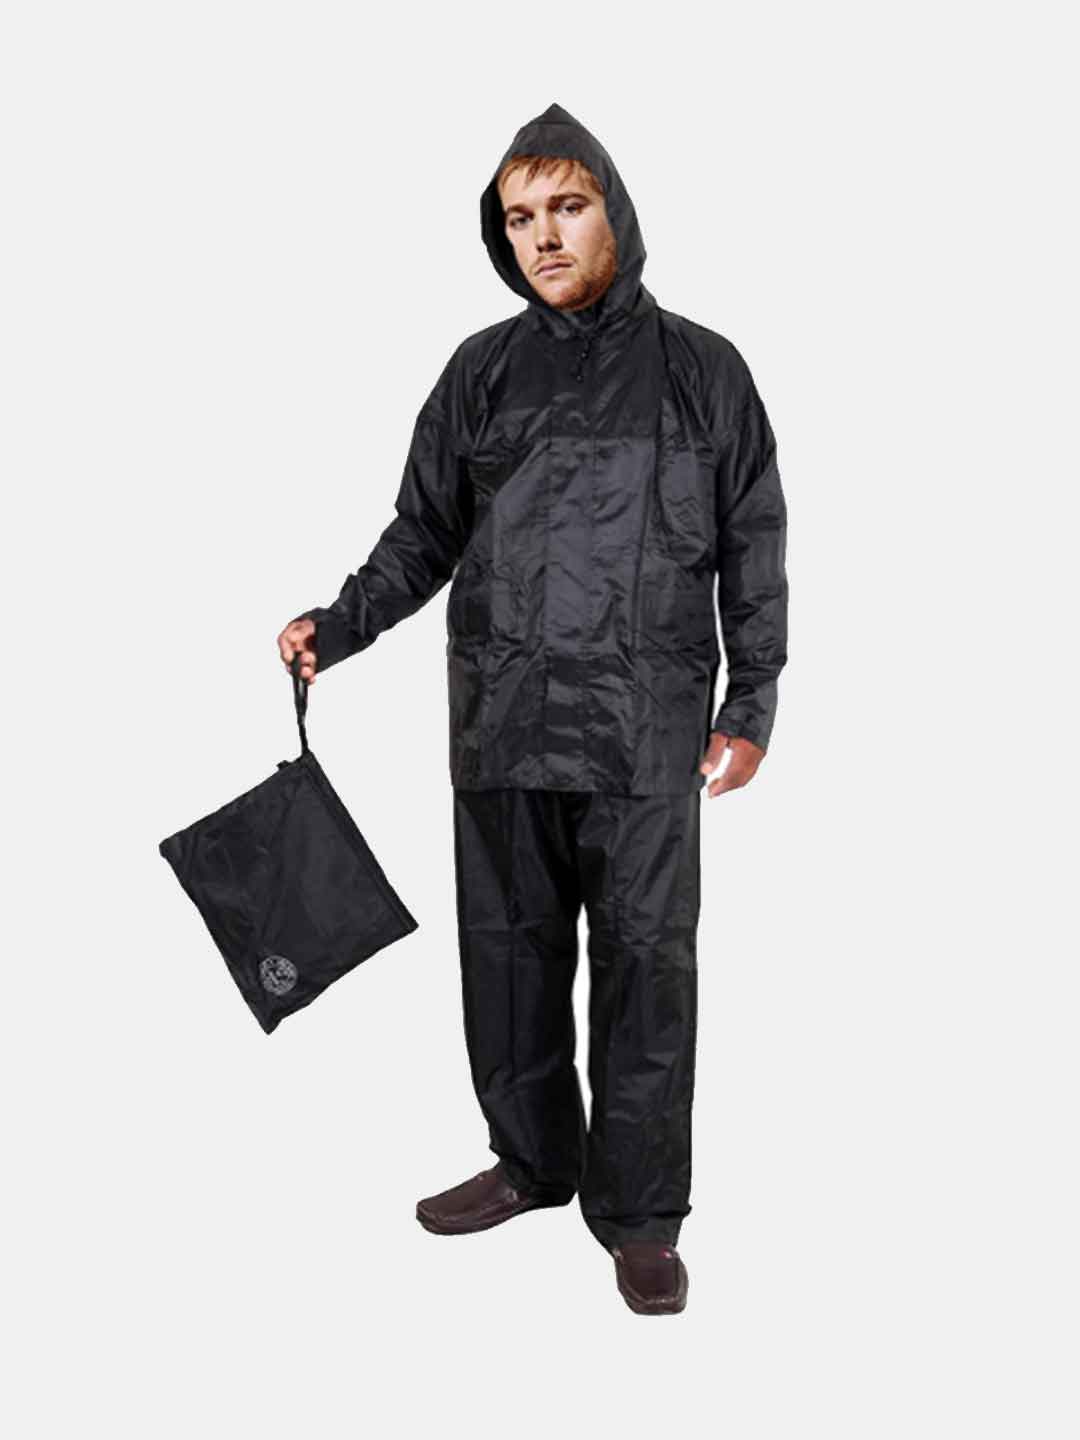 Buy Reversible Double-Layered Rain Suit for Men - Omega - Varsha Rainwear